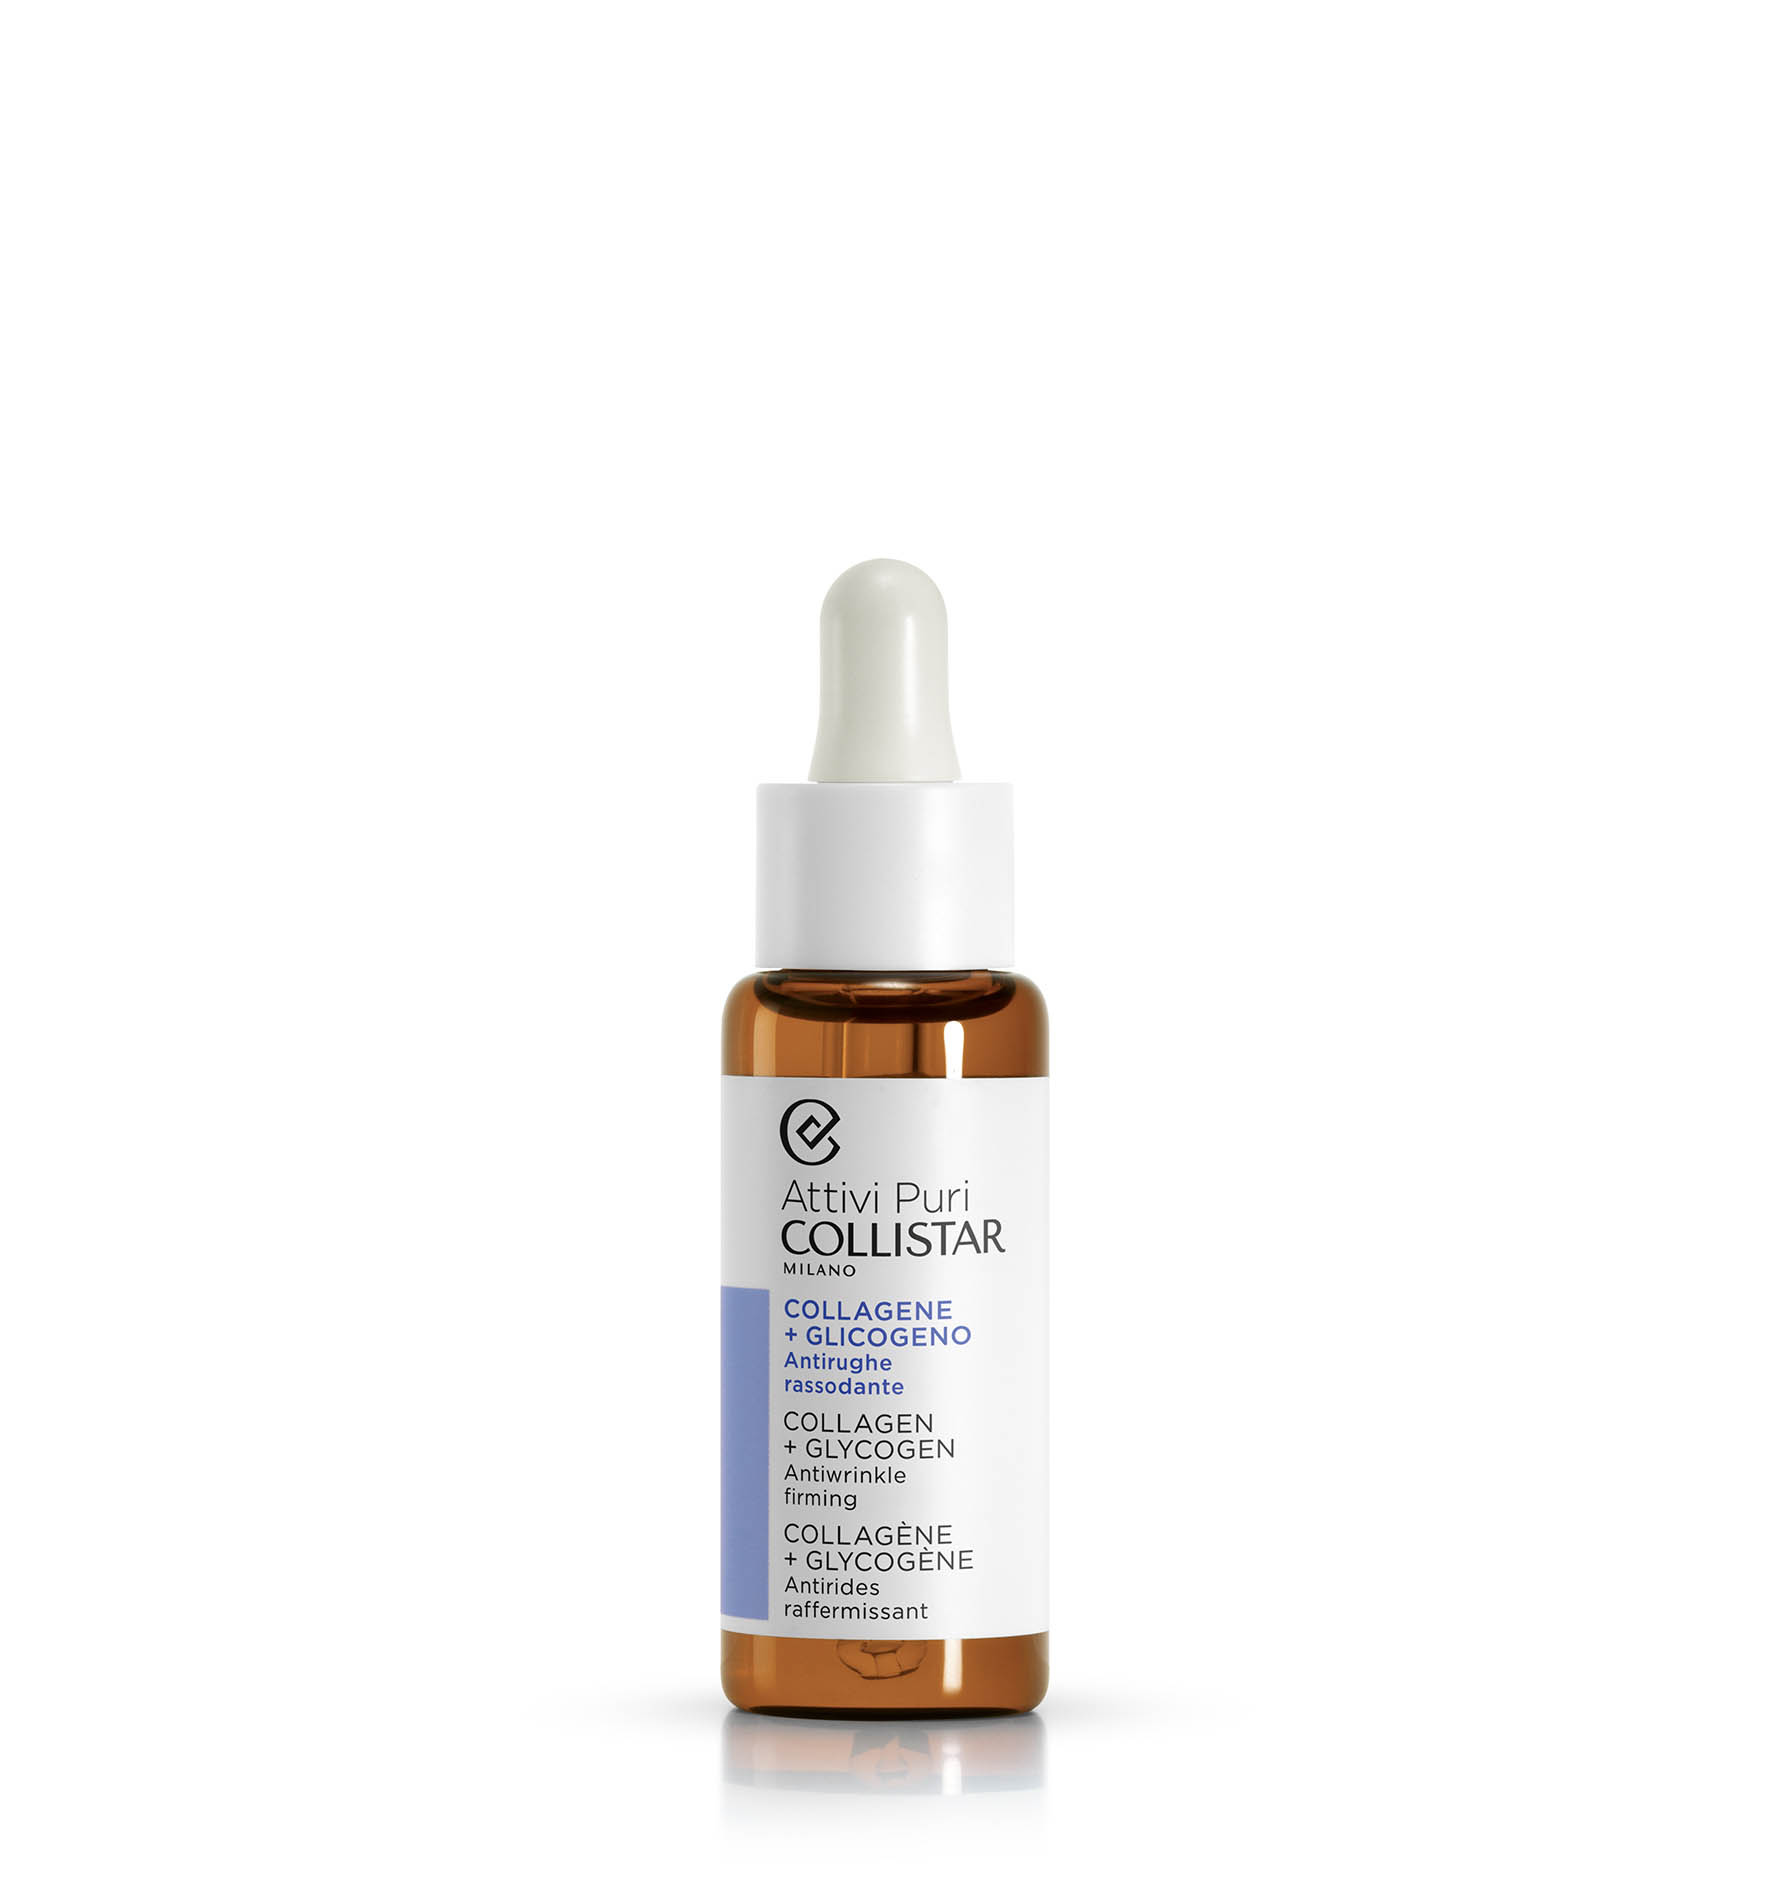 COLLAGEN + GLYCOGEN 30 ml - Serums | Collistar - Shop Online Ufficiale